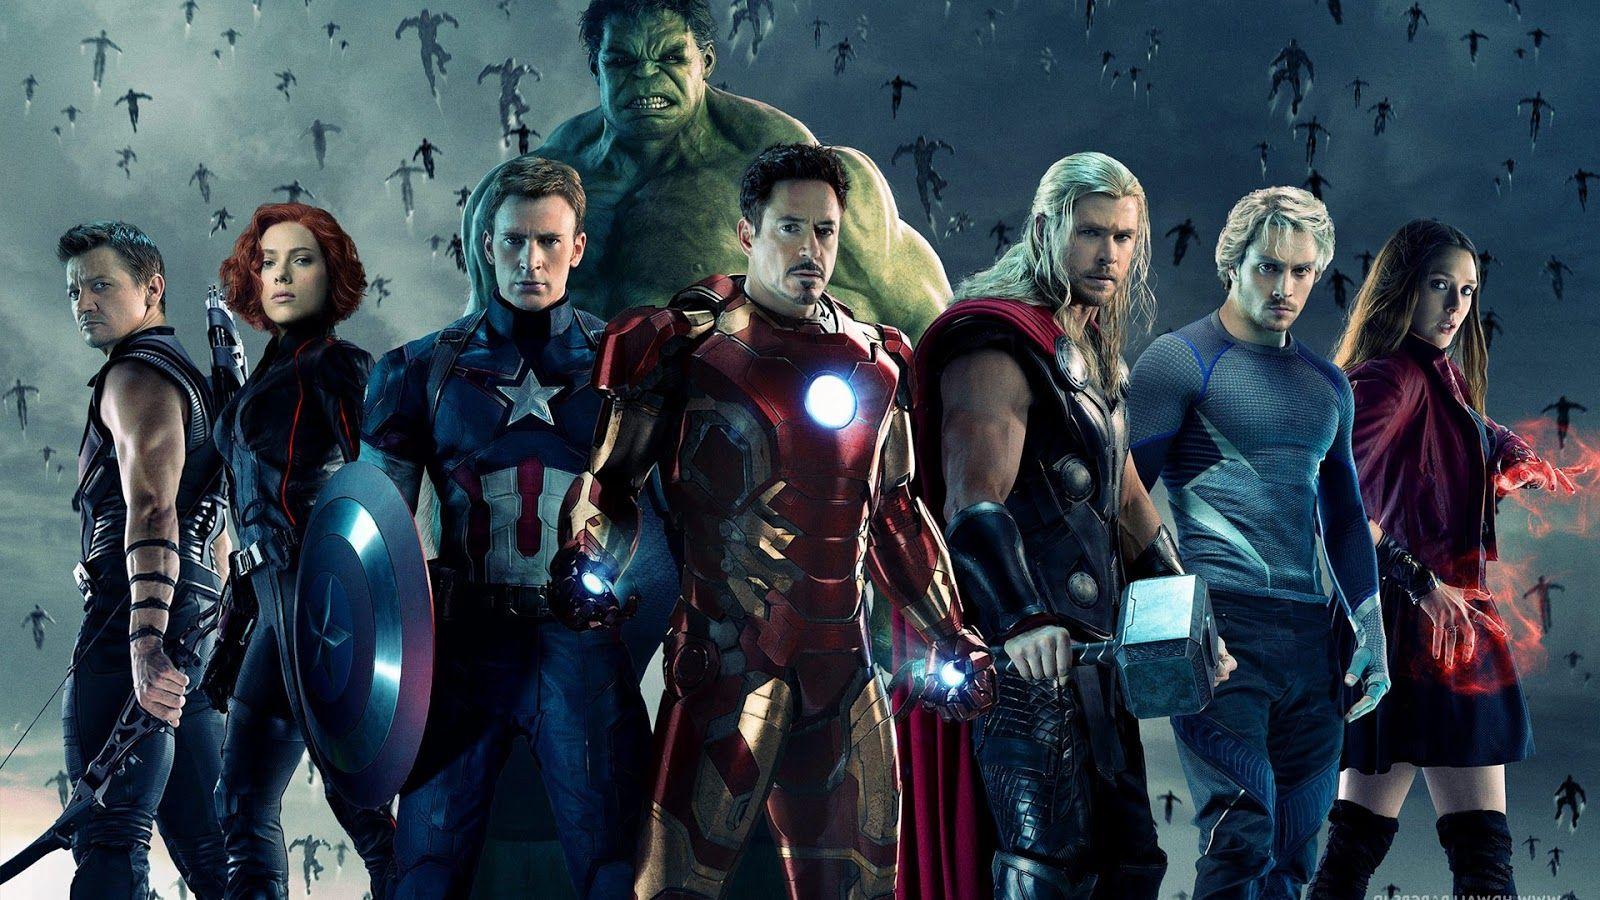 Avengers Age of Ultron 2015 USA Bluray 1080p Ganool 2200 MB Google